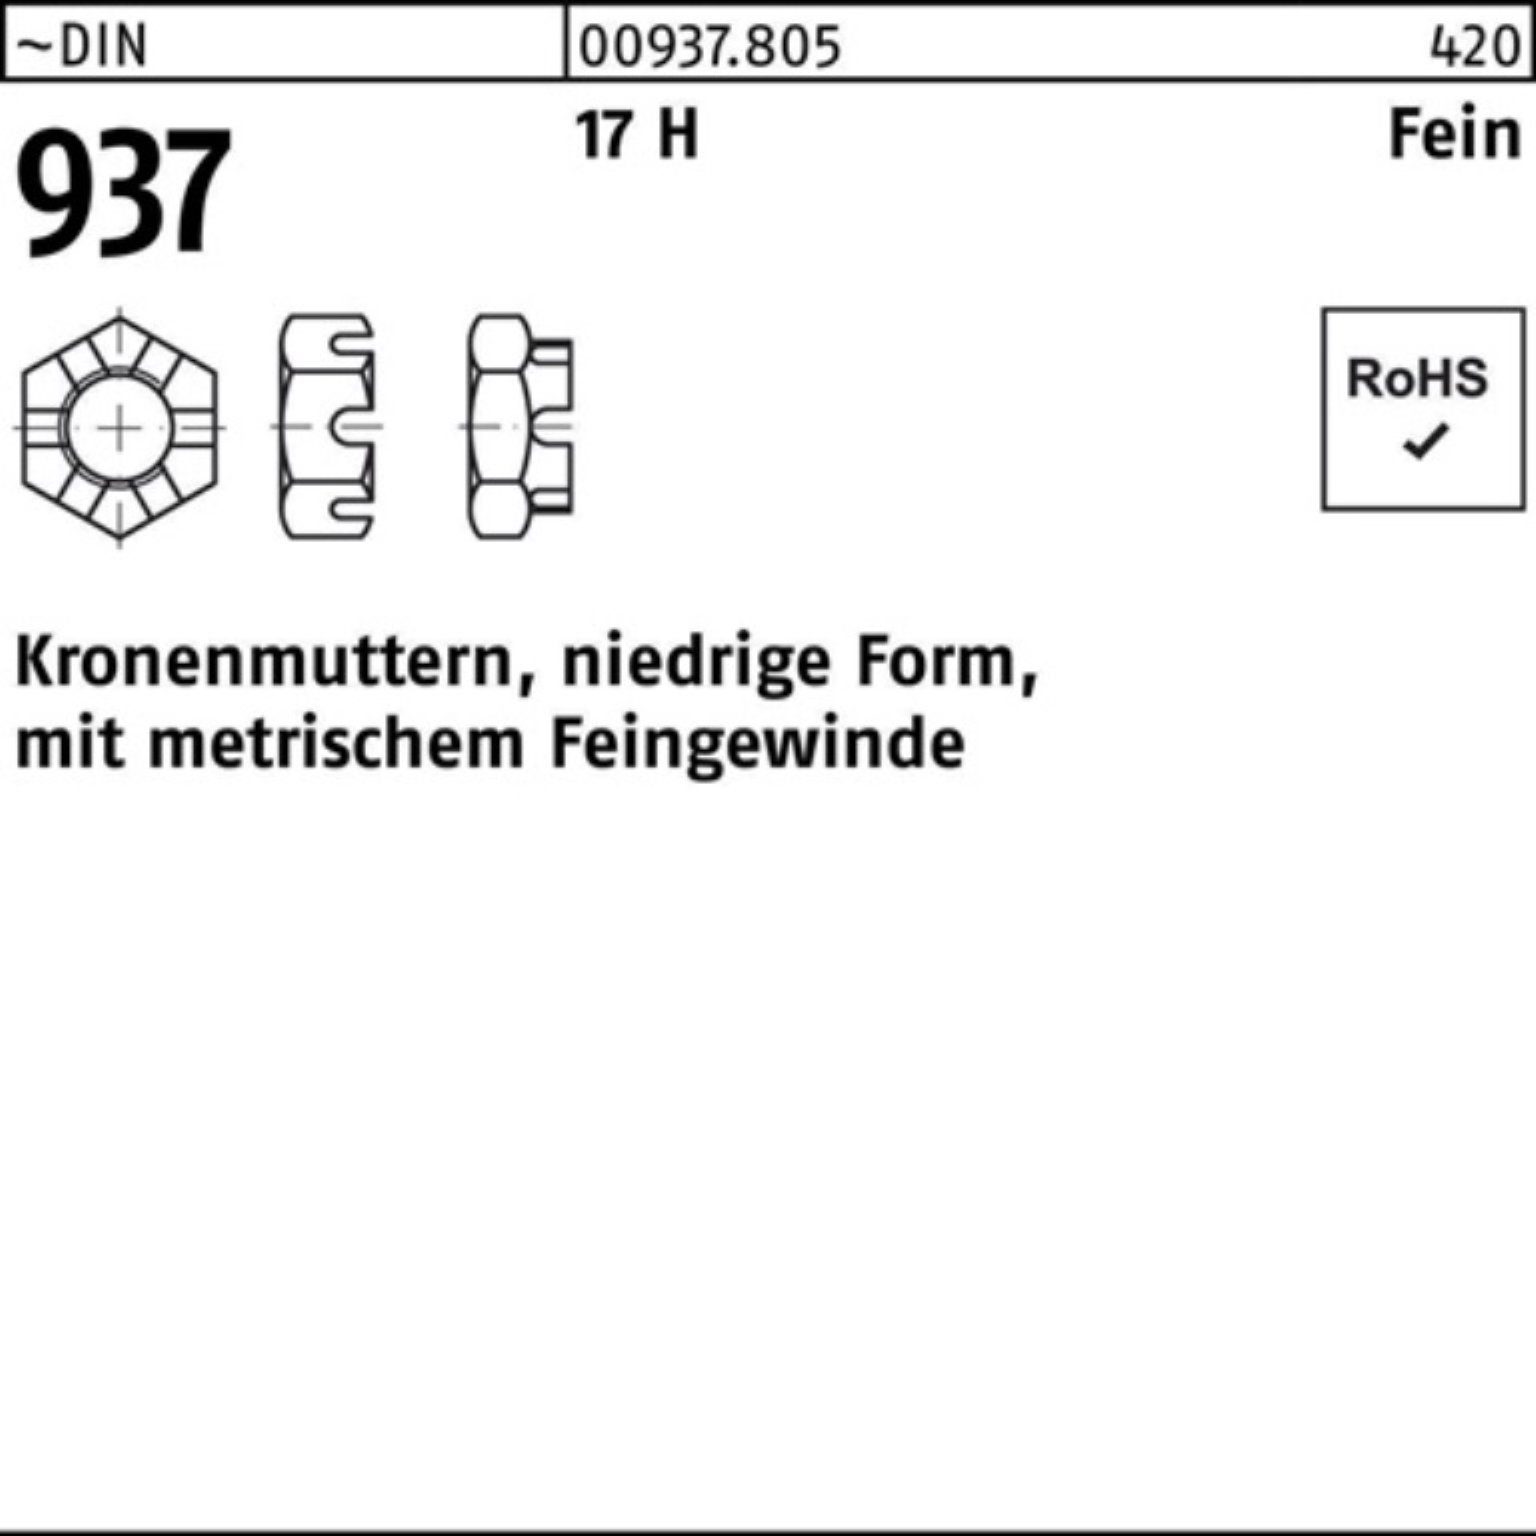 Reyher Kronenmutter 100er Pack Kronenmutter DIN 937 niedrige FormM24x 2 17 H Feingew. 25 S